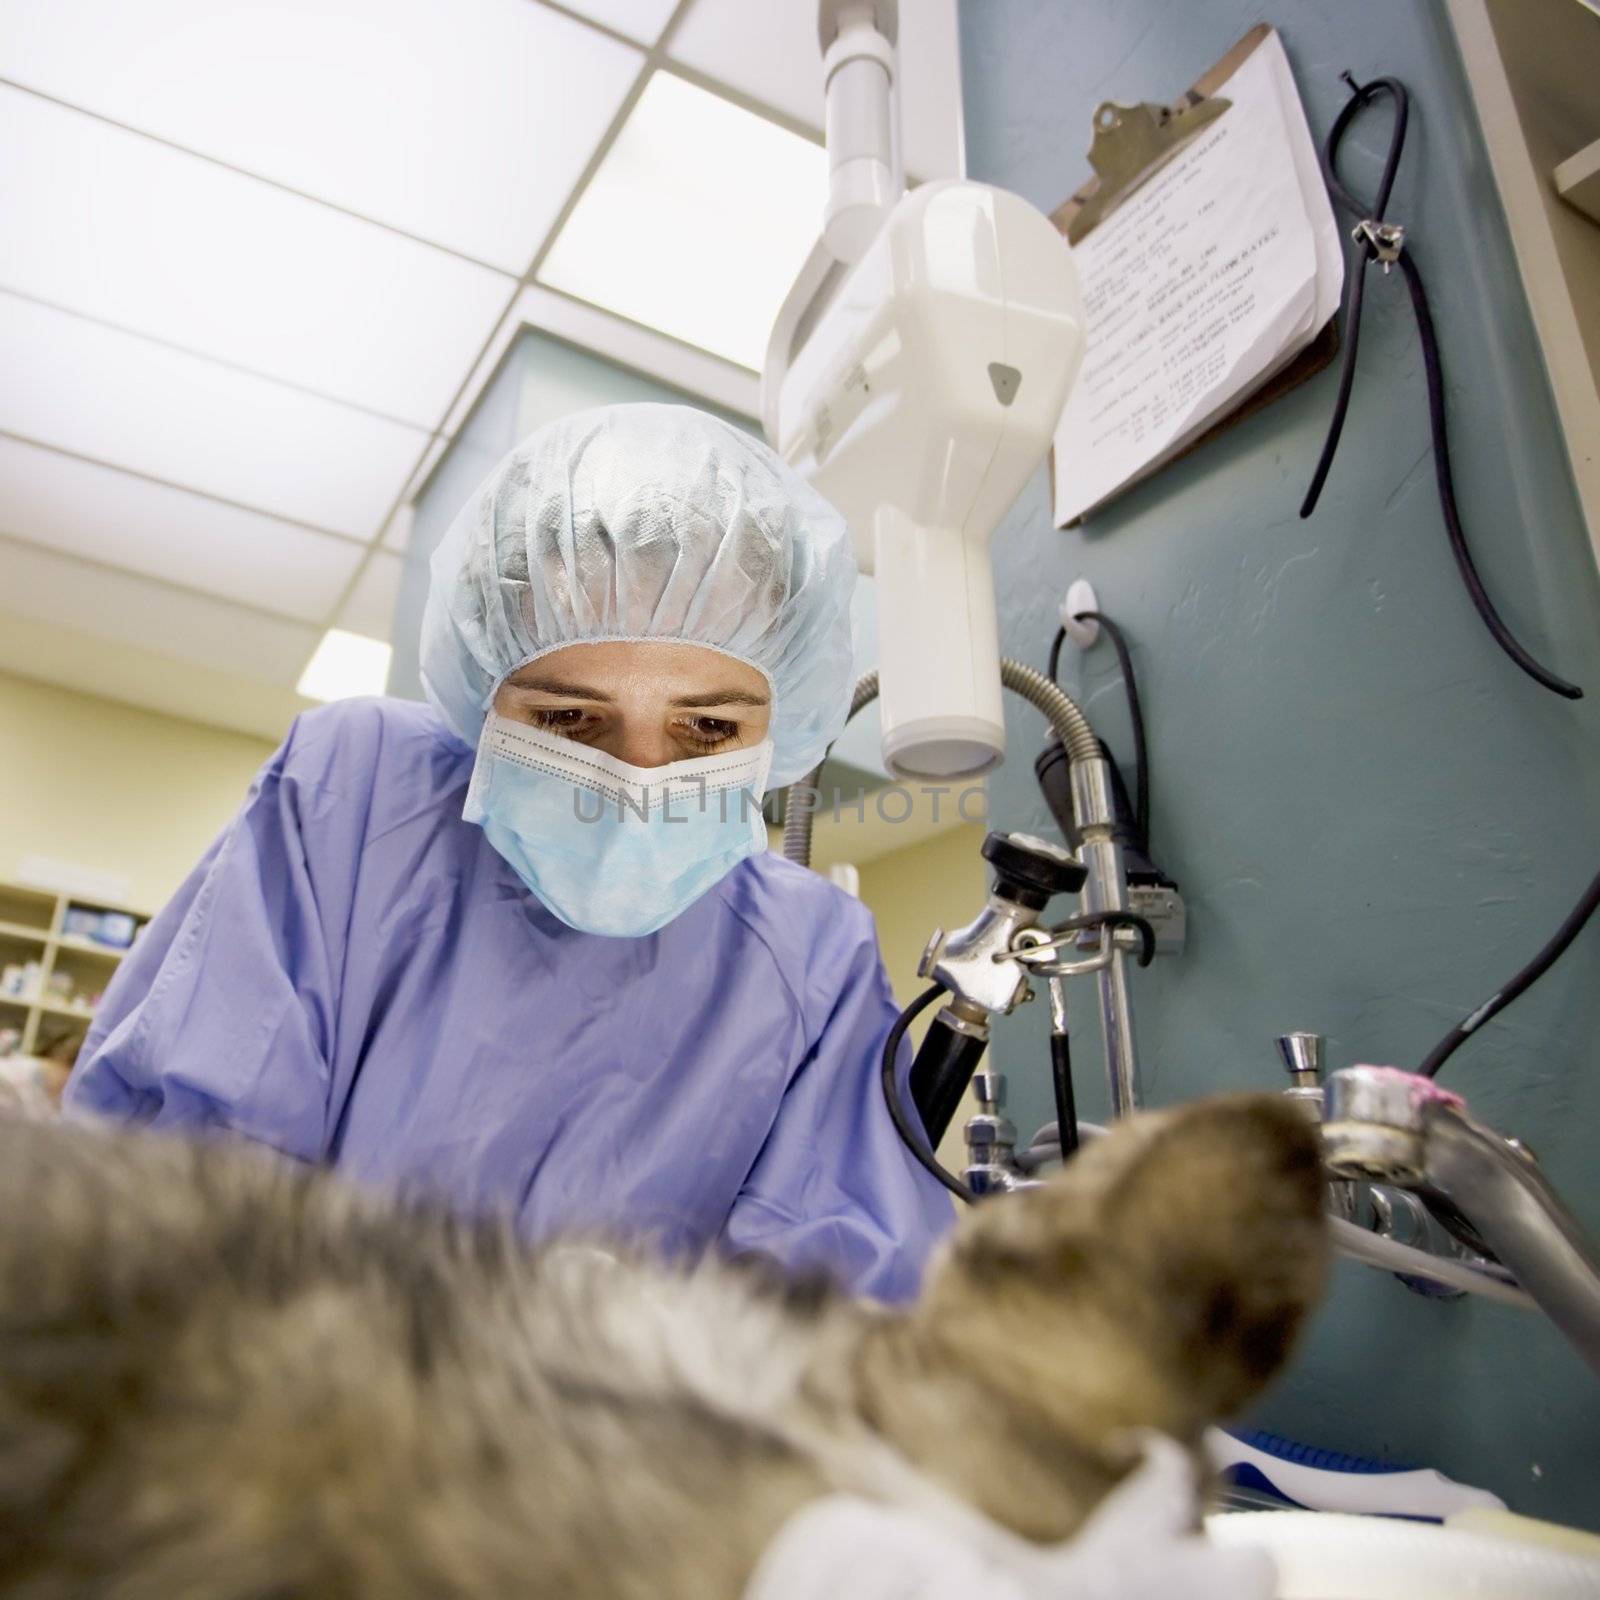 Veterinary Surgery by Creatista